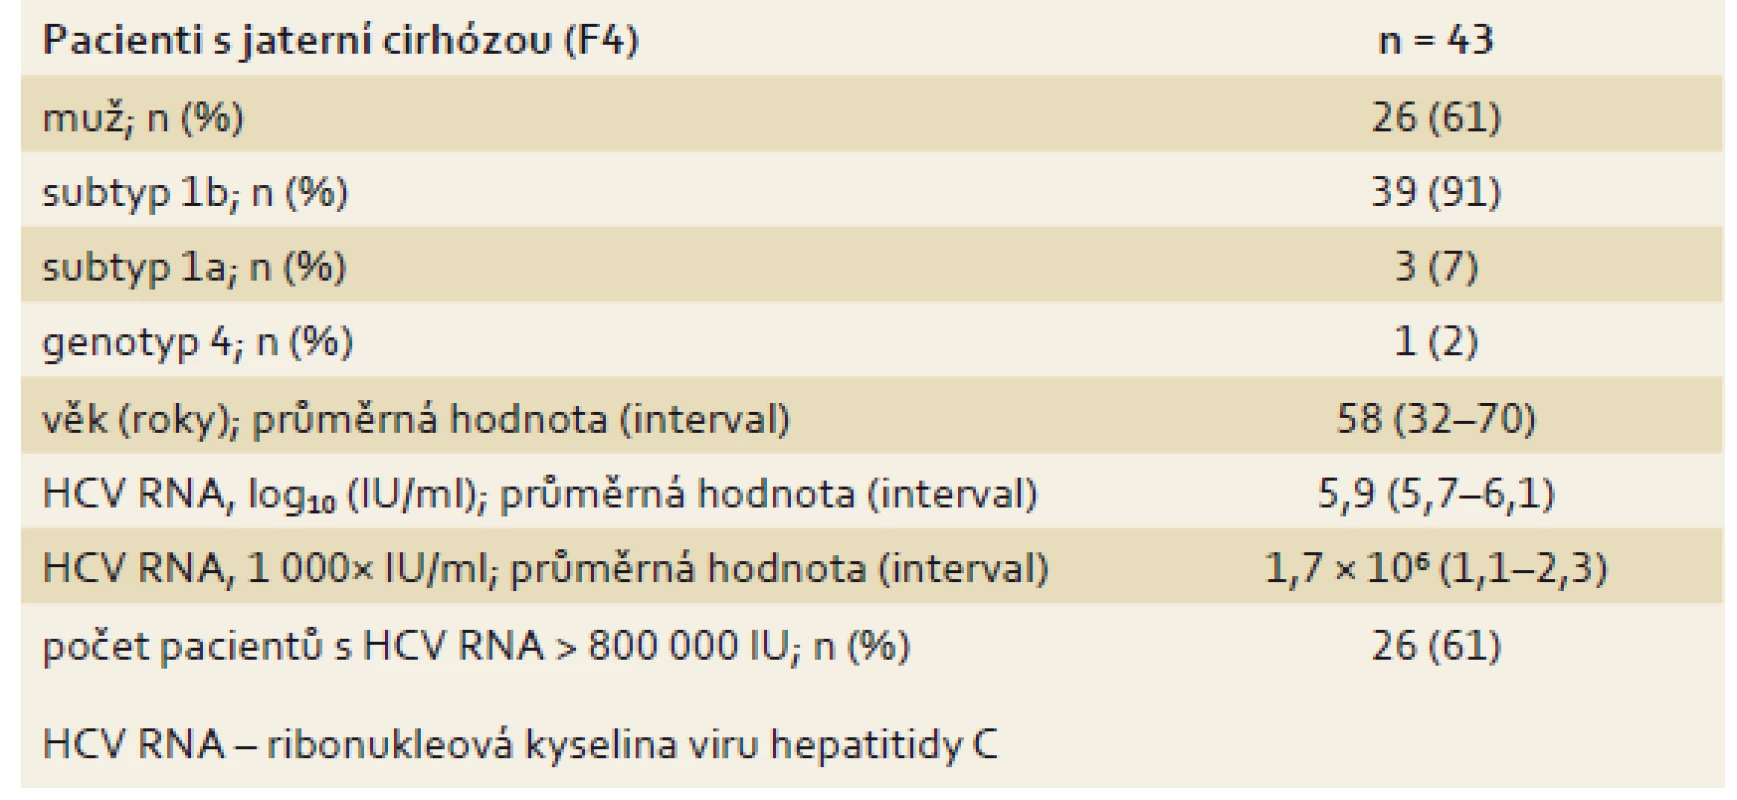 Základní parametry pacientů s jaterní cirhózou (n = 43).
Tab. 5. Basic parameters of patients with liver cirrhosis (n = 43).